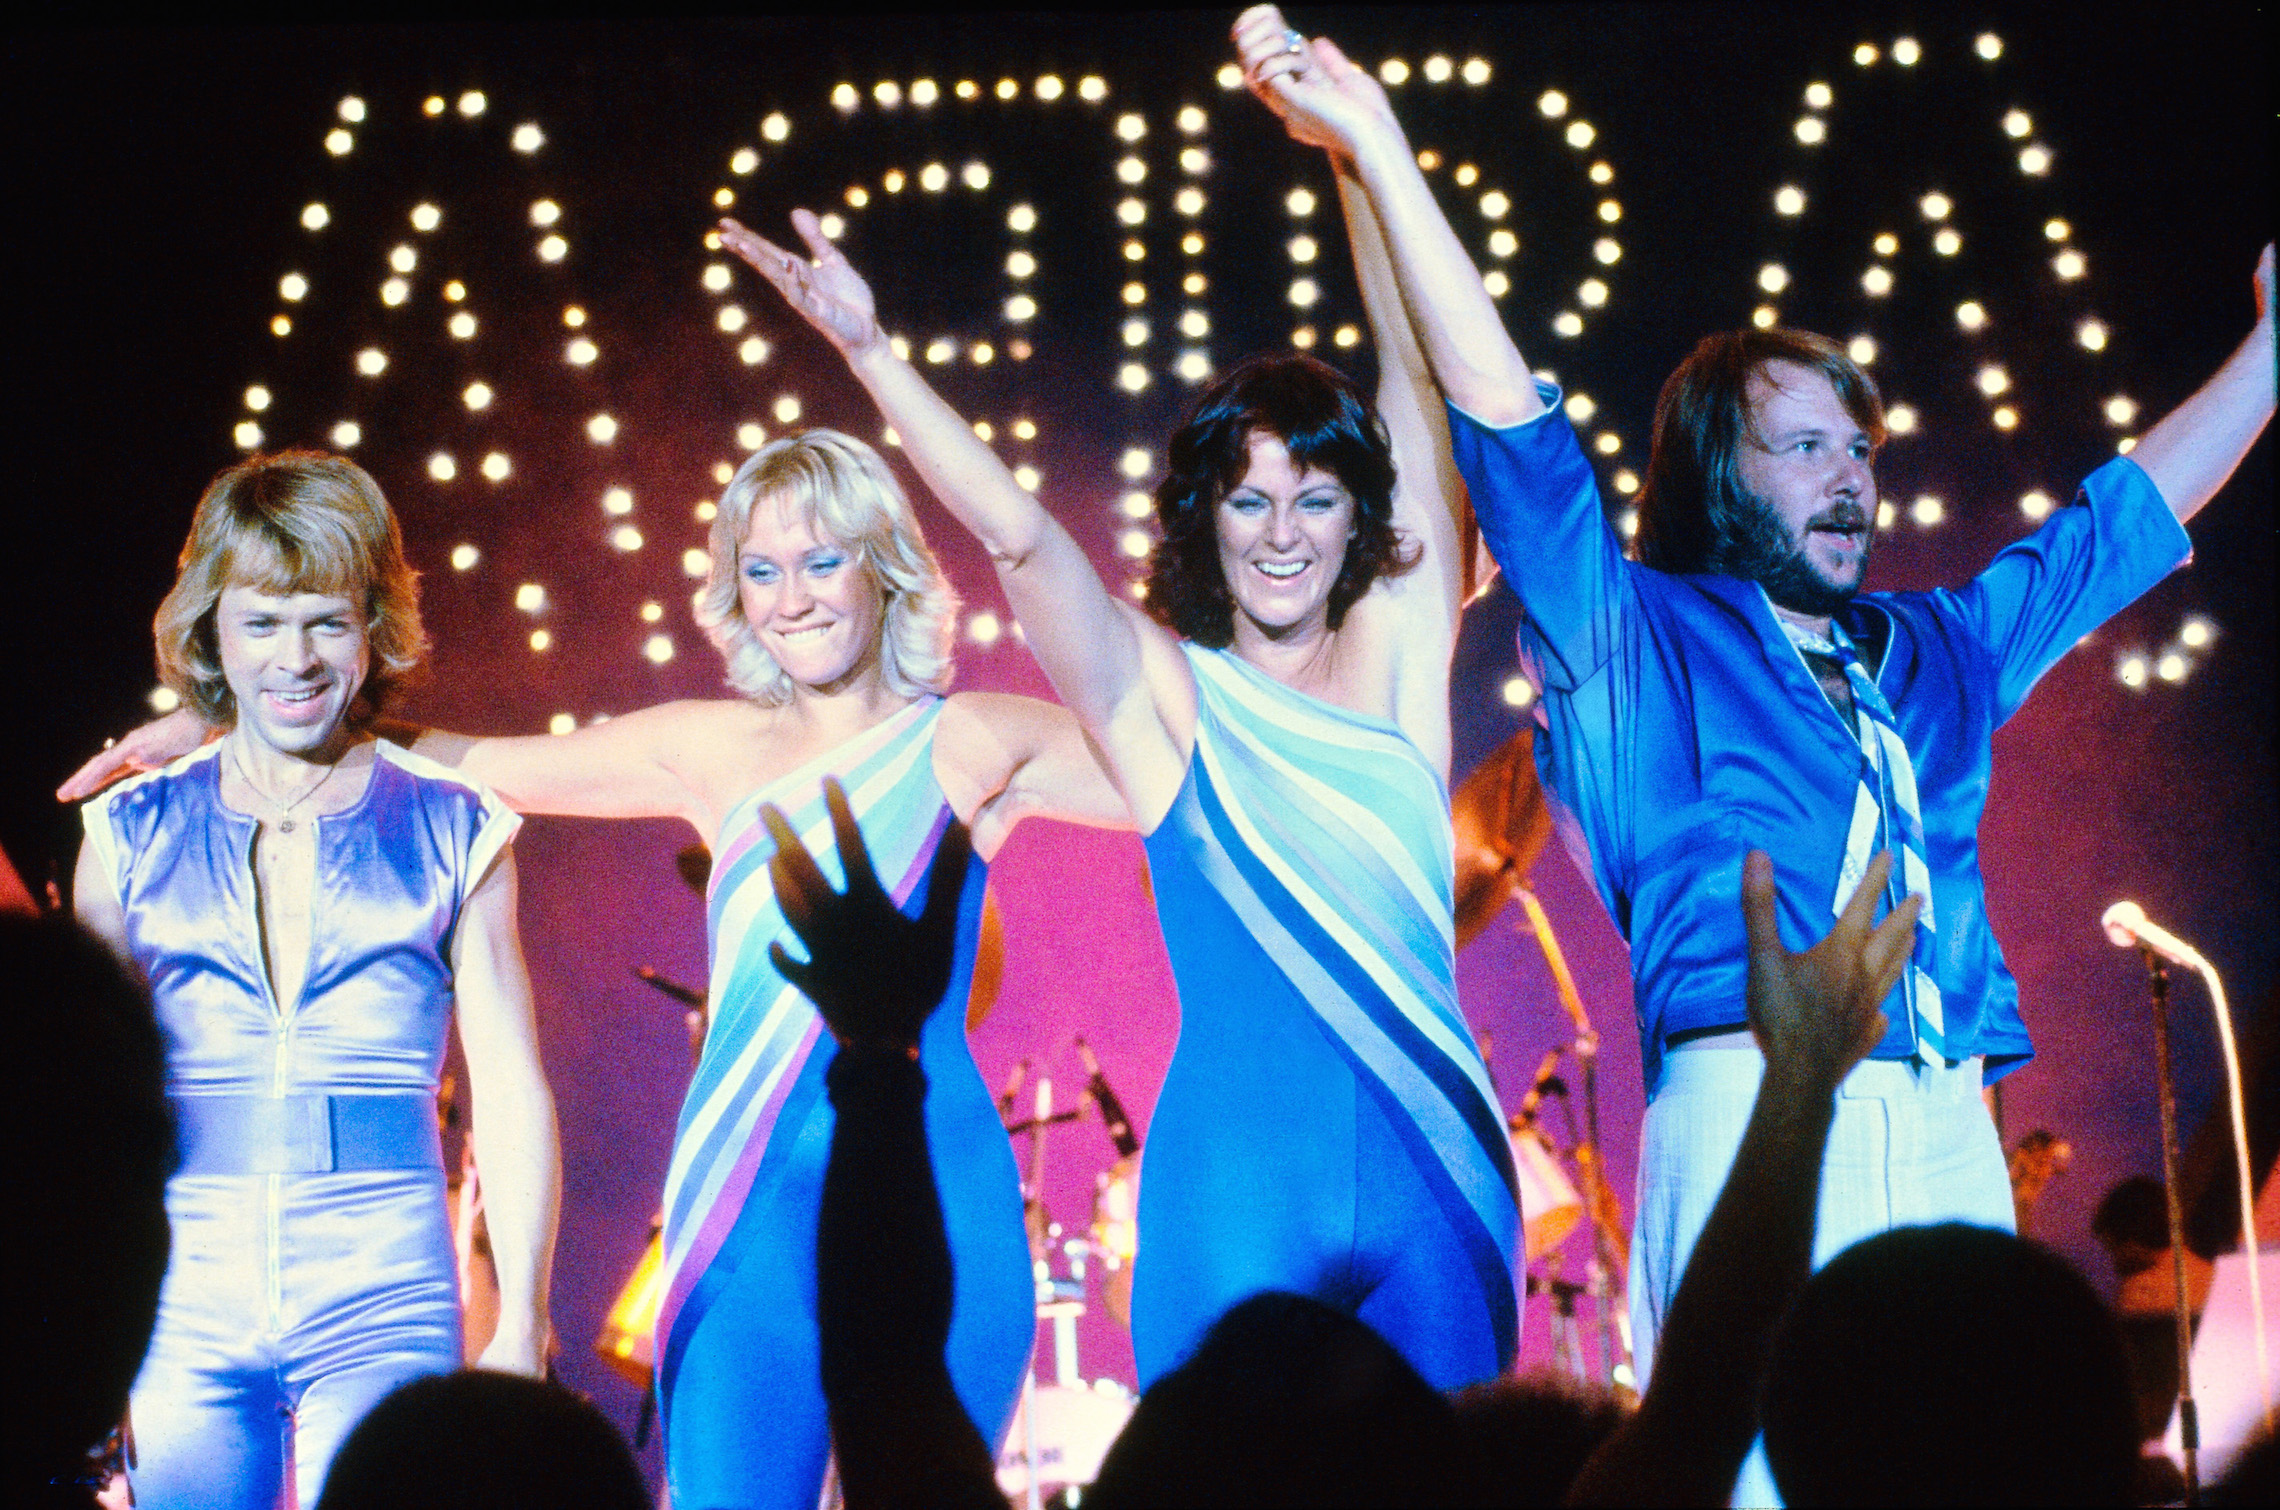 ABBA to reunite for collaborative “entertainment experience”